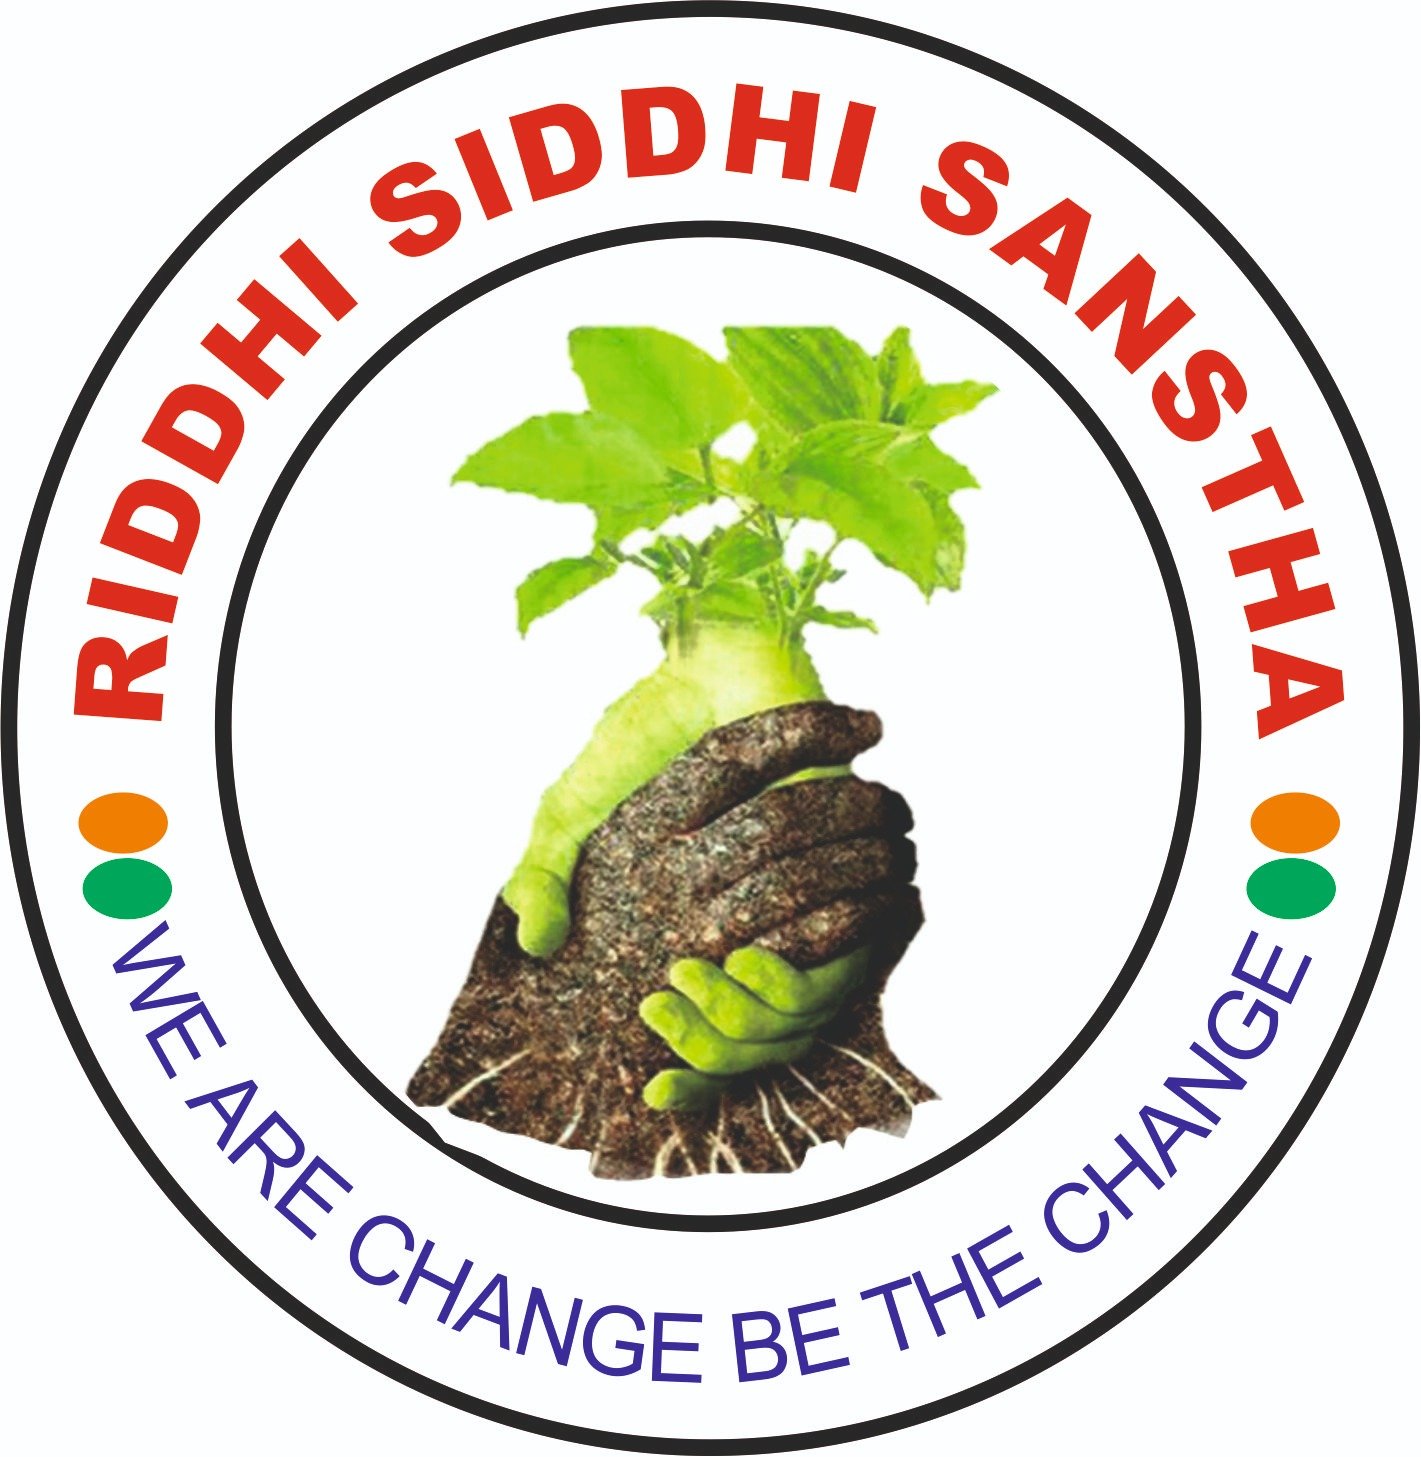 Riddhi Siddhi Infotech on LinkedIn: Riddhi Siddhi Infotech | LinkedIn